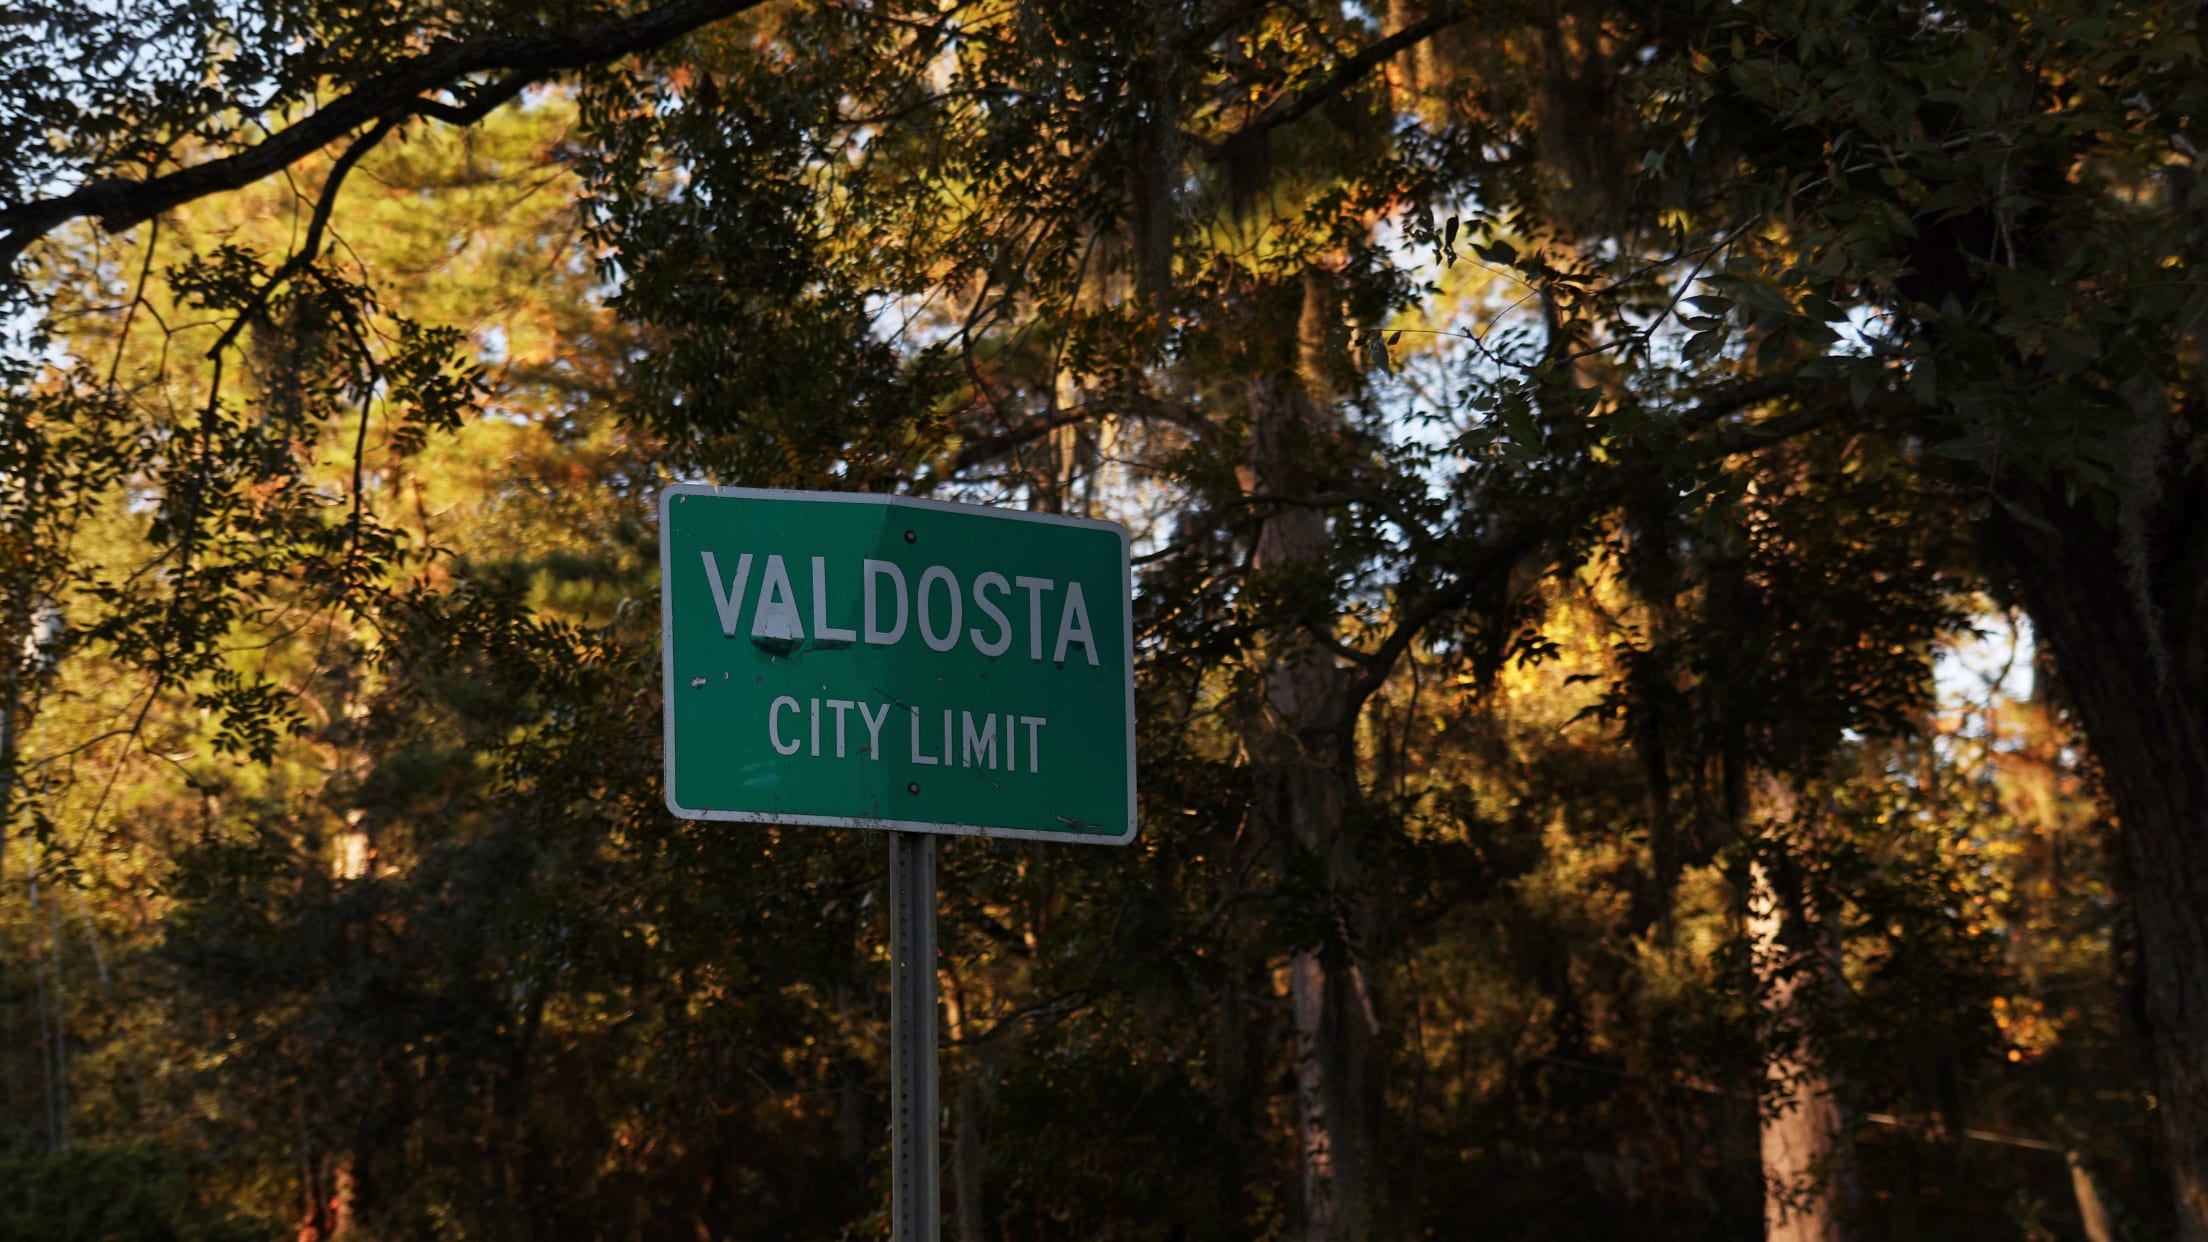 Valdosta, Georgia city limit sign.